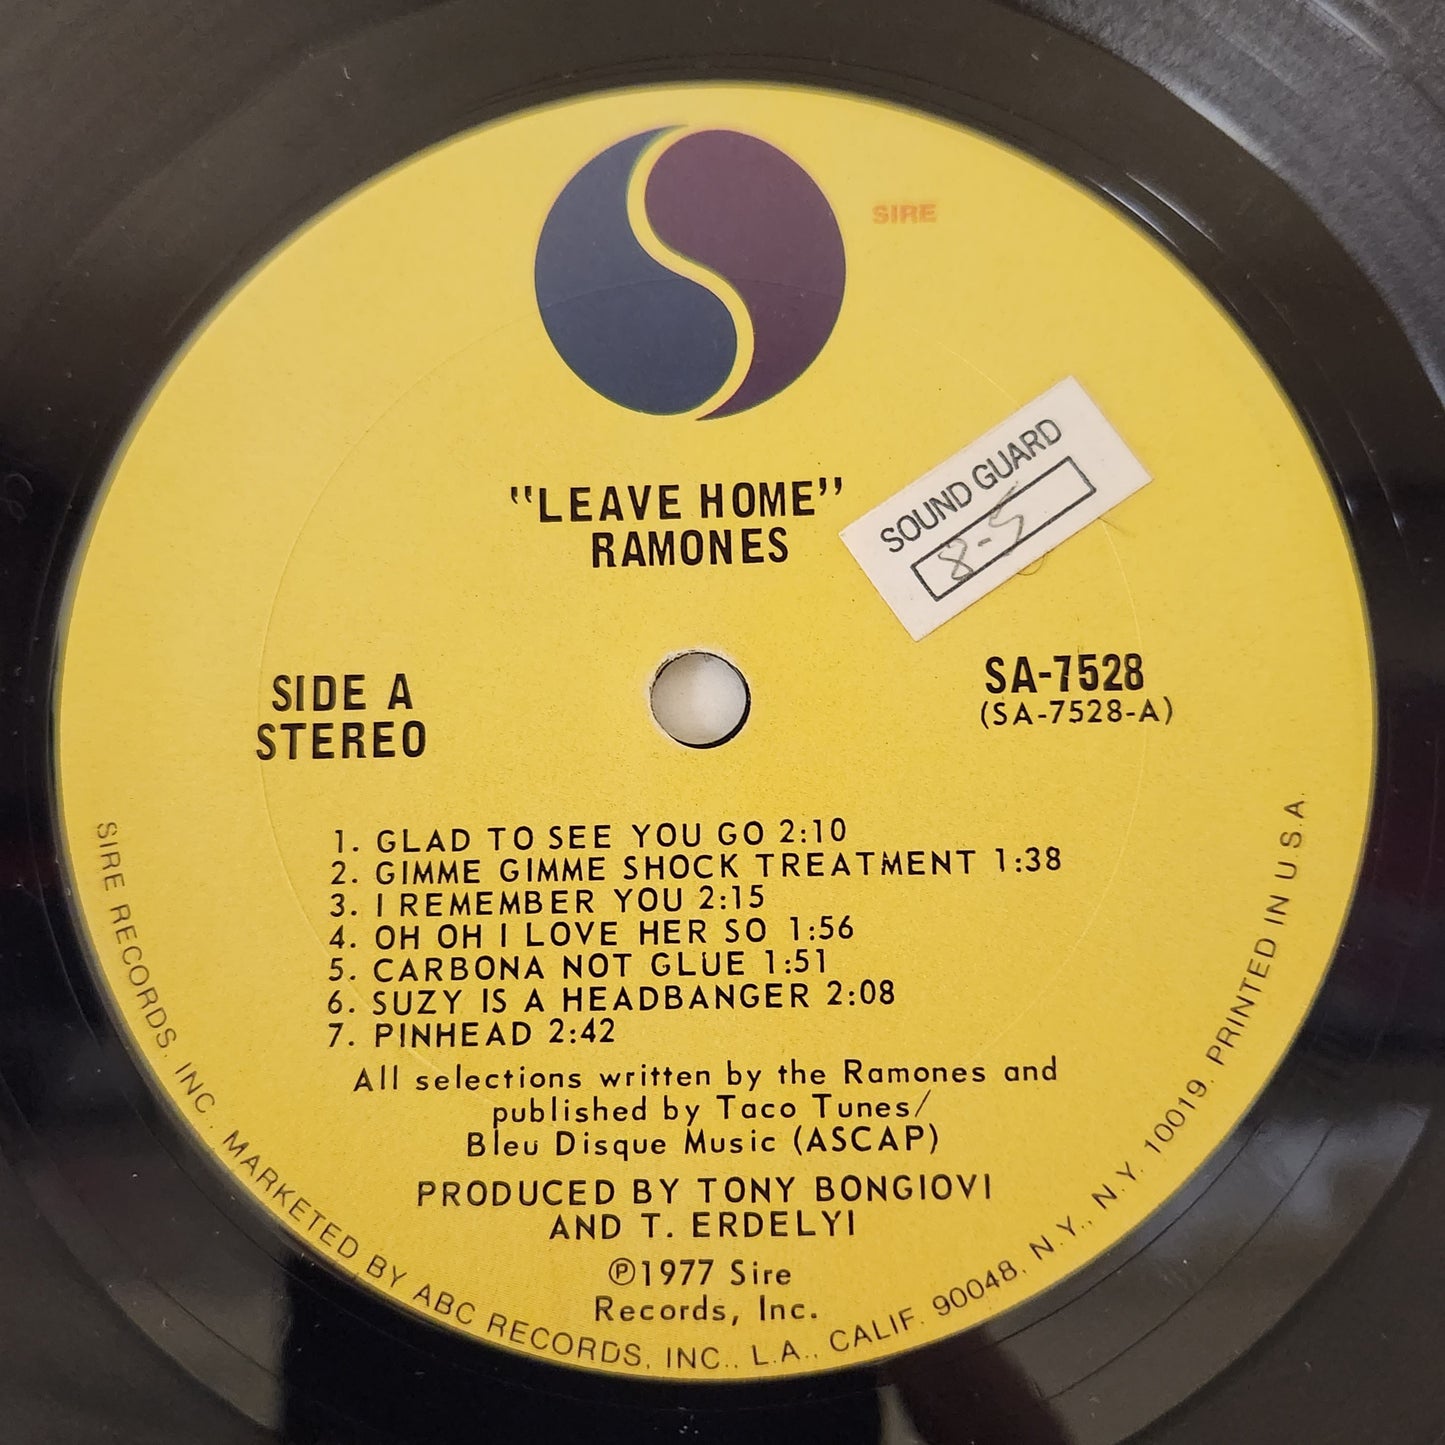 Ramones "Leave Home" 1977 Punk Rock Record Album